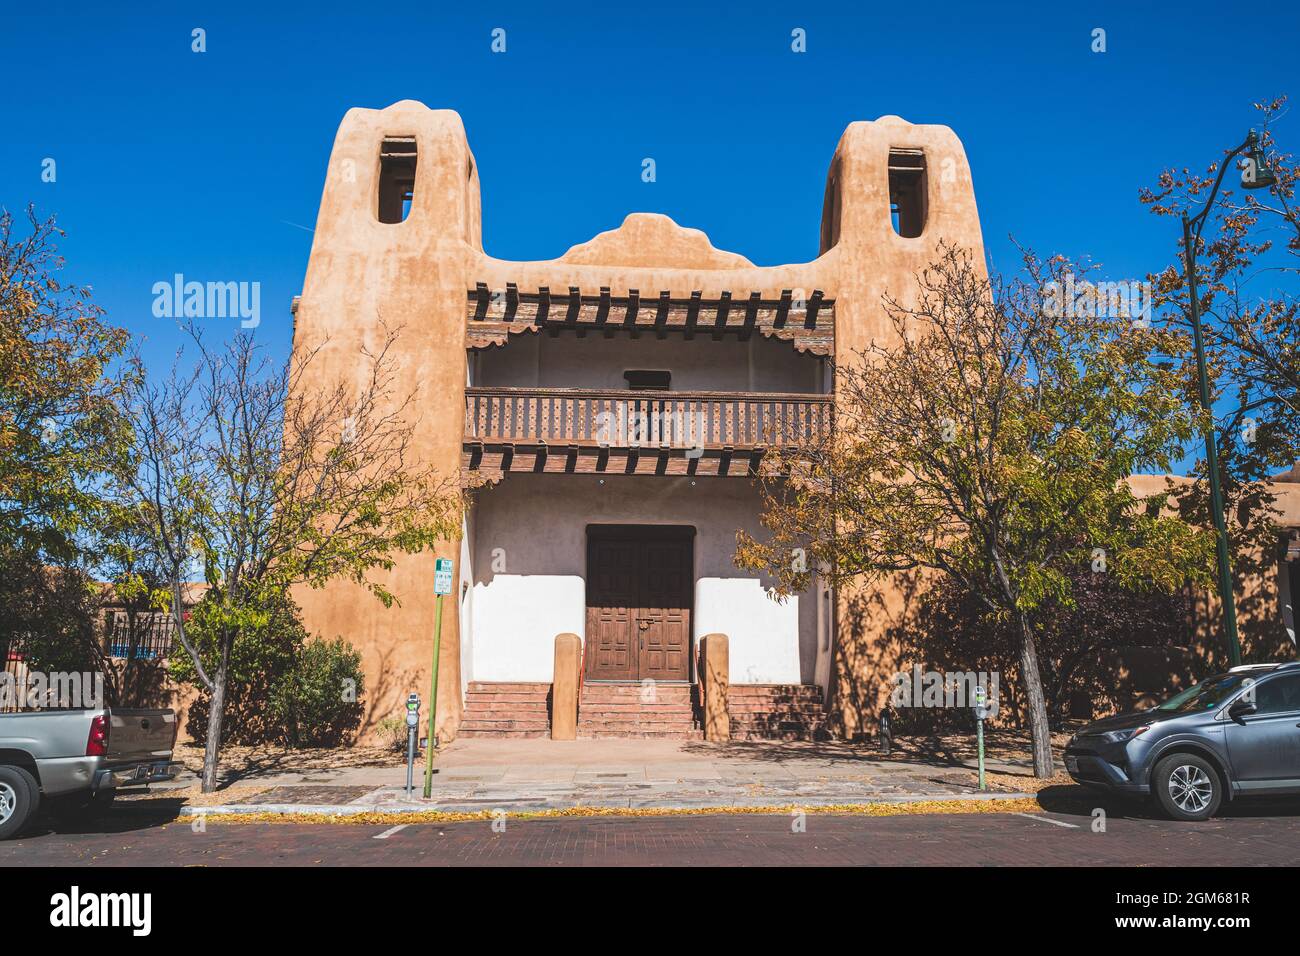 Southwest Adobe architecture of Santa Fe New Mexico against blue sky Stock Photo